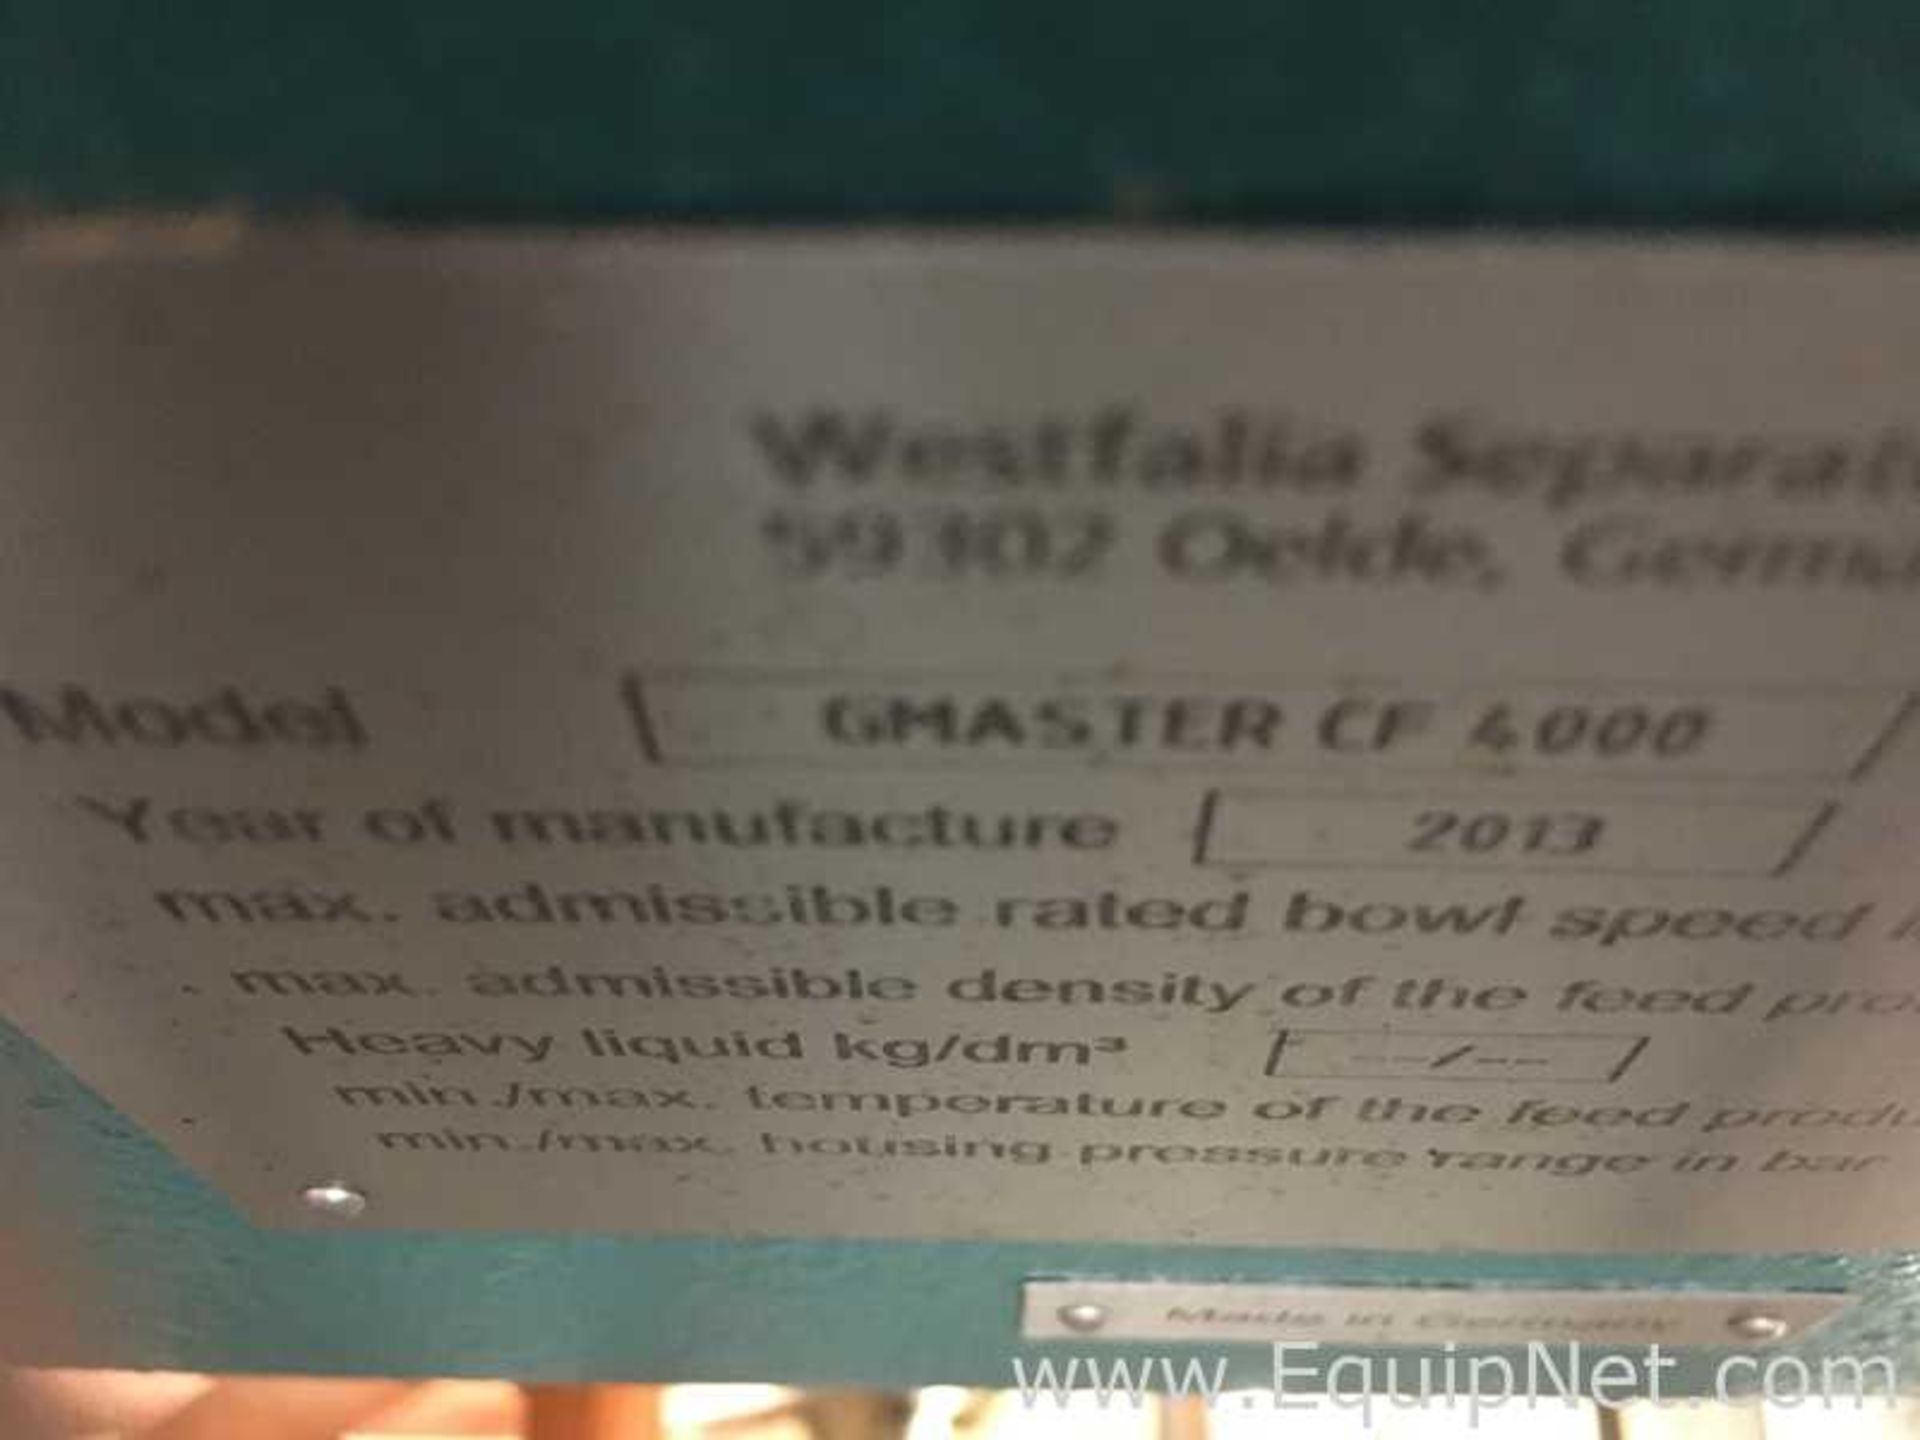 GEA Westfalia Separator Group GMASTER CF 4000 Stainless Steel Decanter Centrifuge - Image 23 of 44